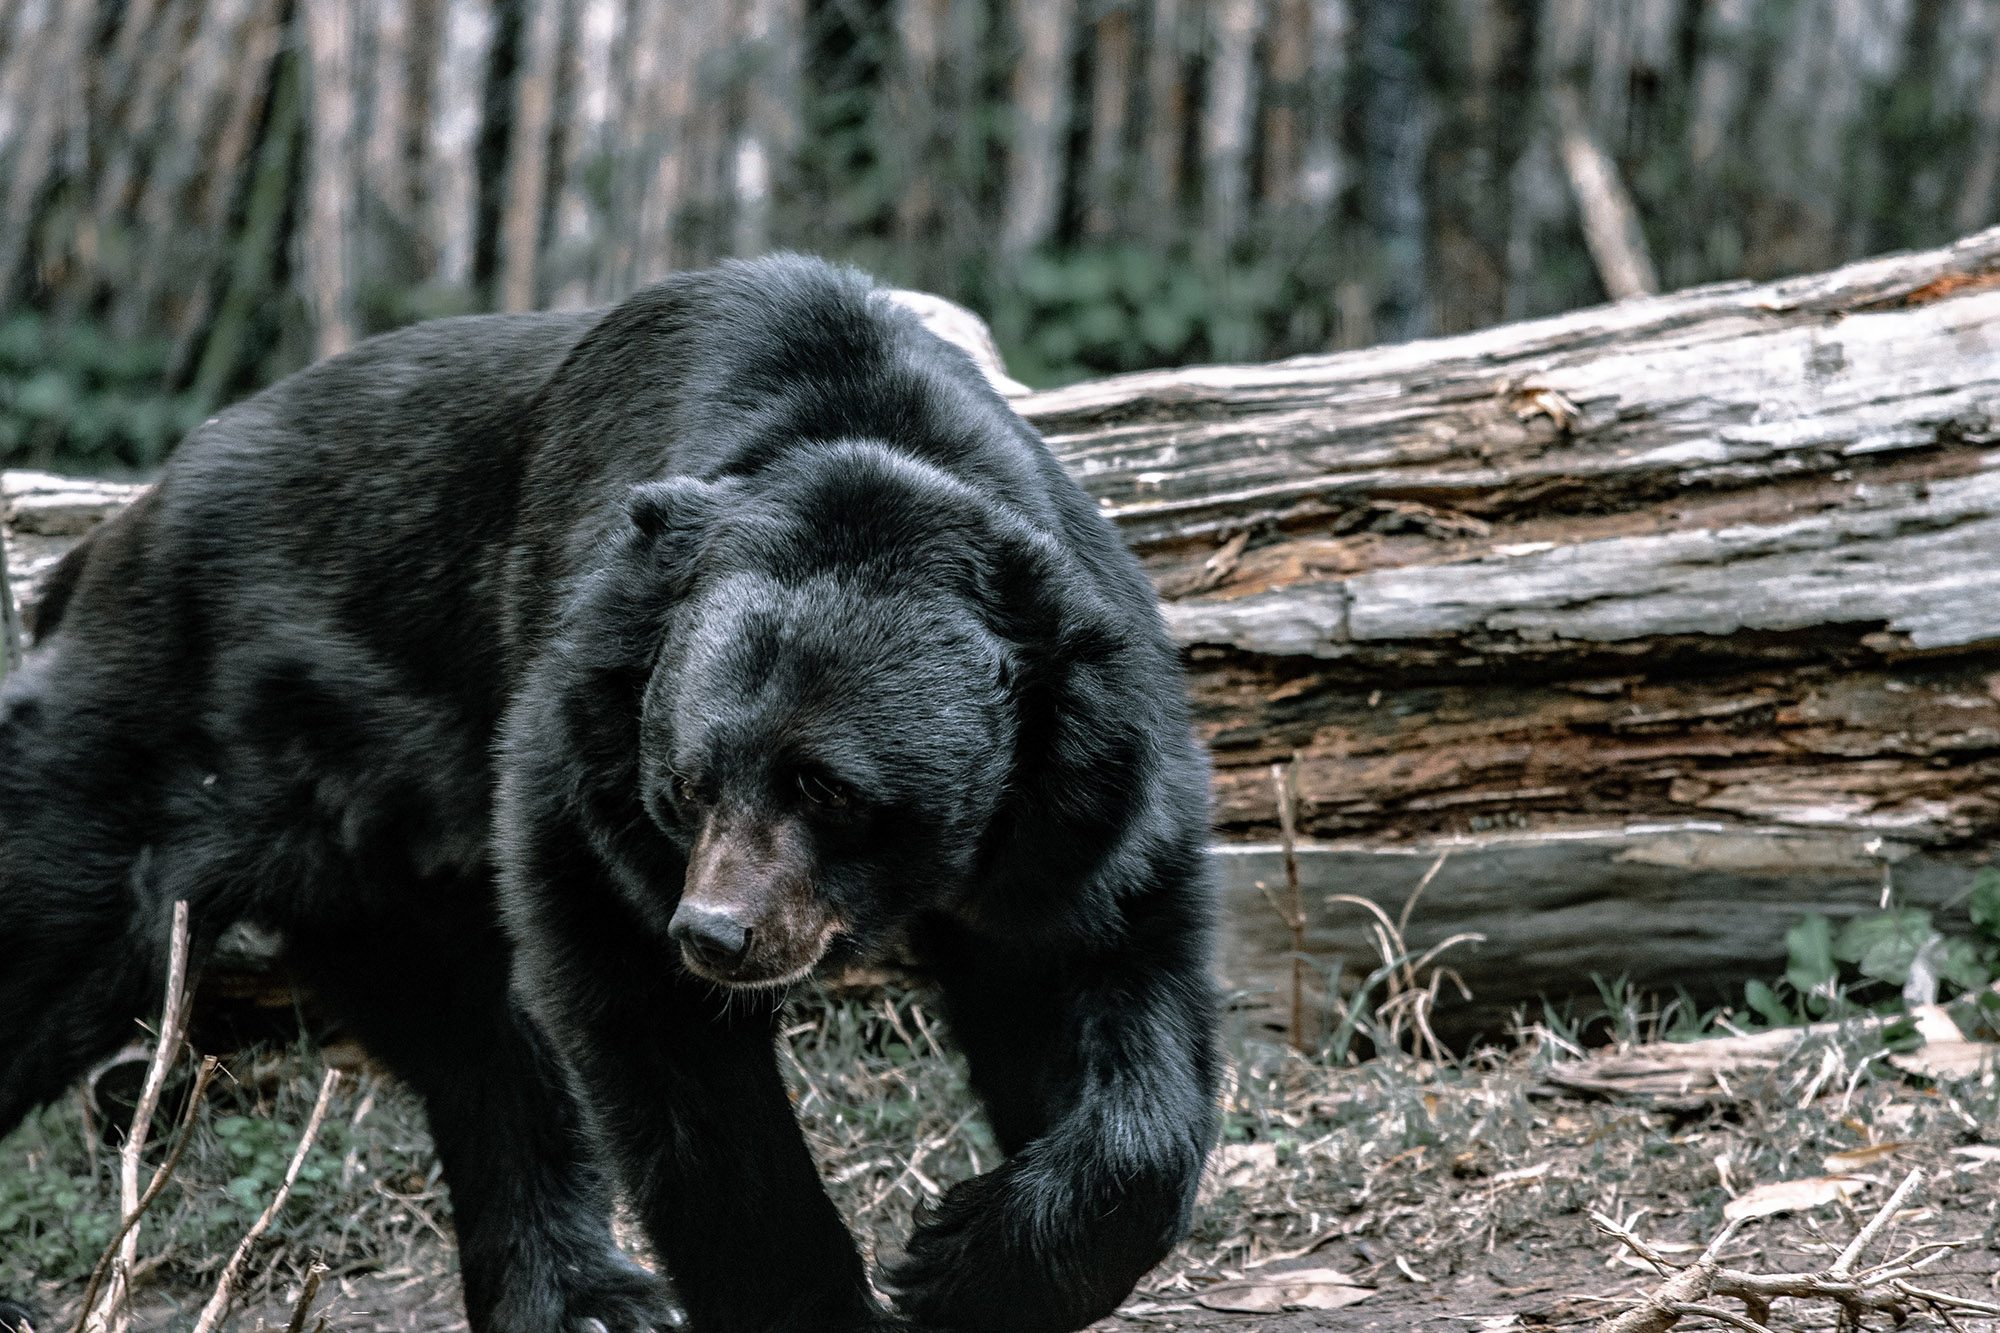 Hunting during the black bear rut